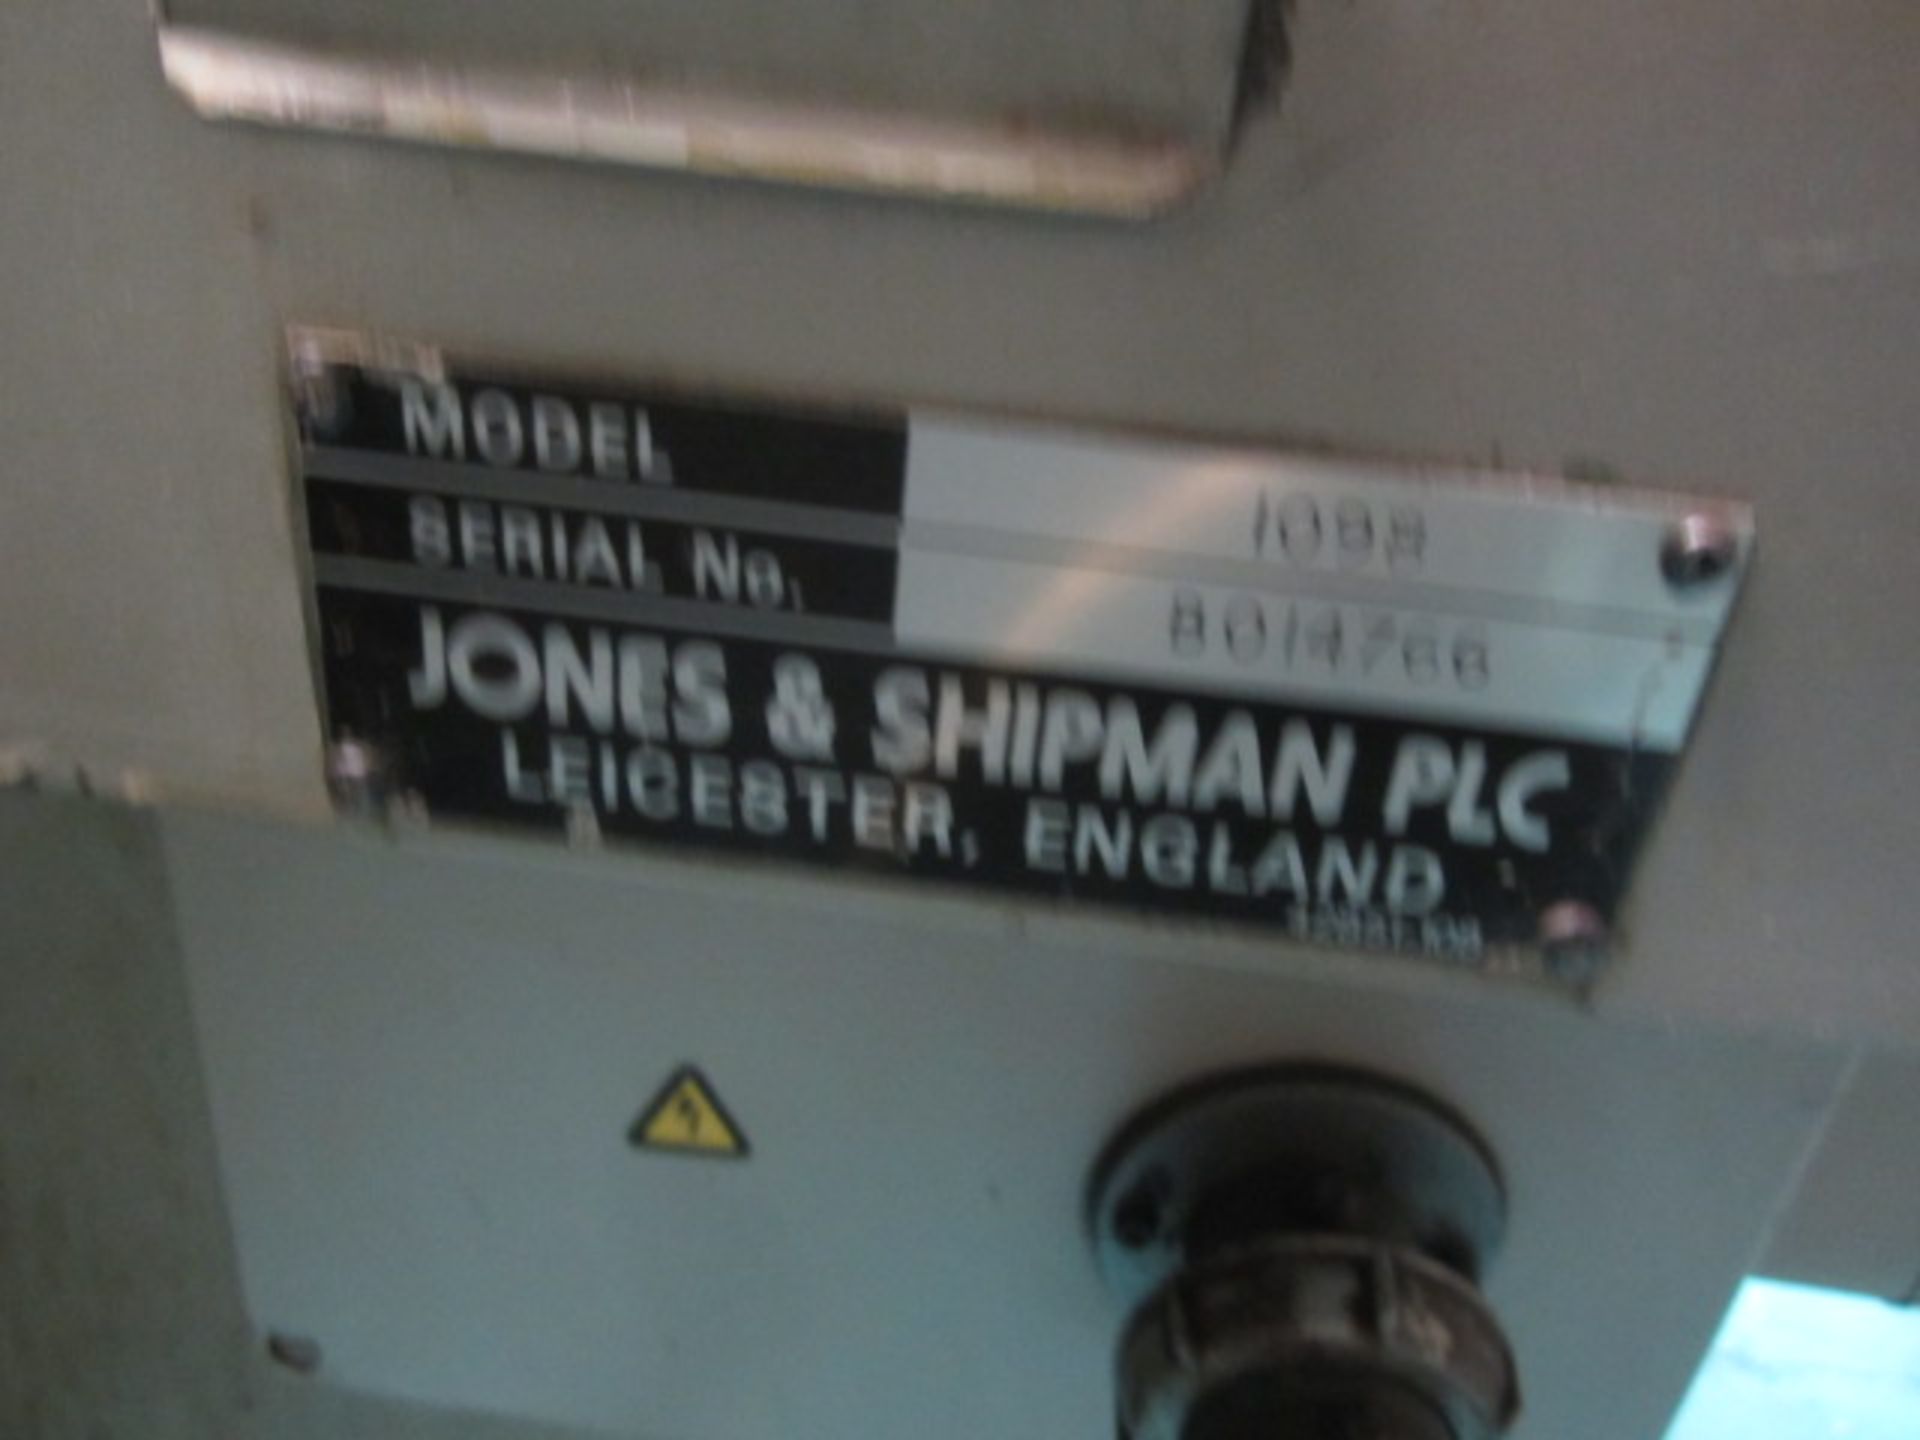 Jones & Shipman 1098 CNC plain cylindrical grinder, serial no: B014766, Allen Bradley 8200 series - Image 6 of 8